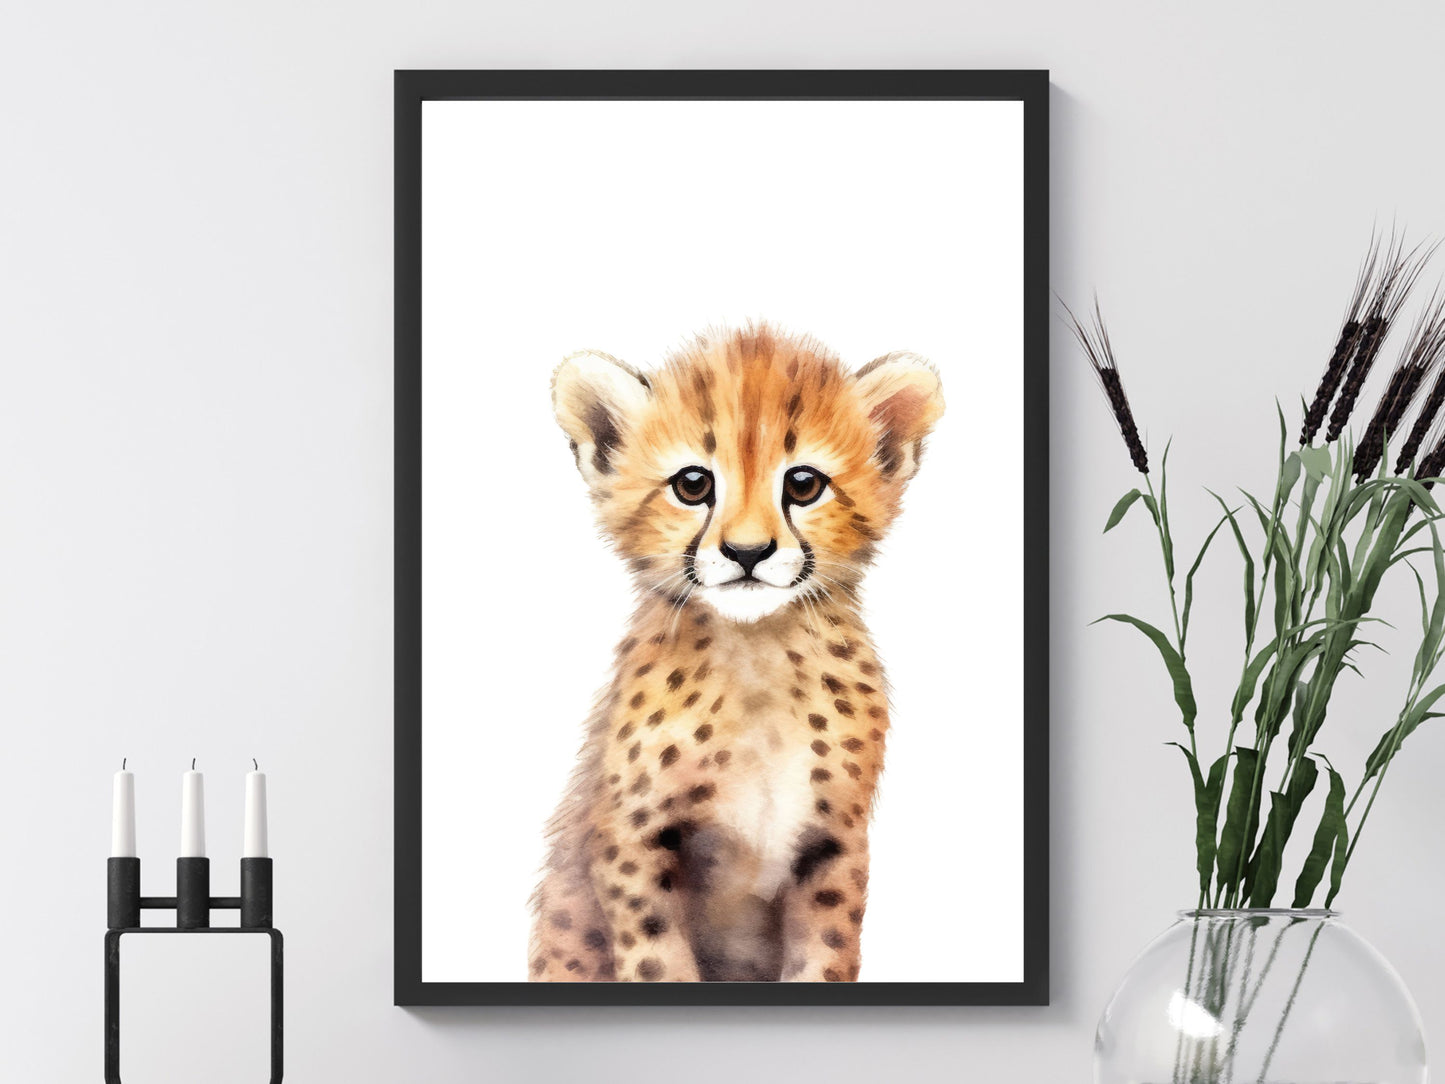 Cheetah - Safari Collection